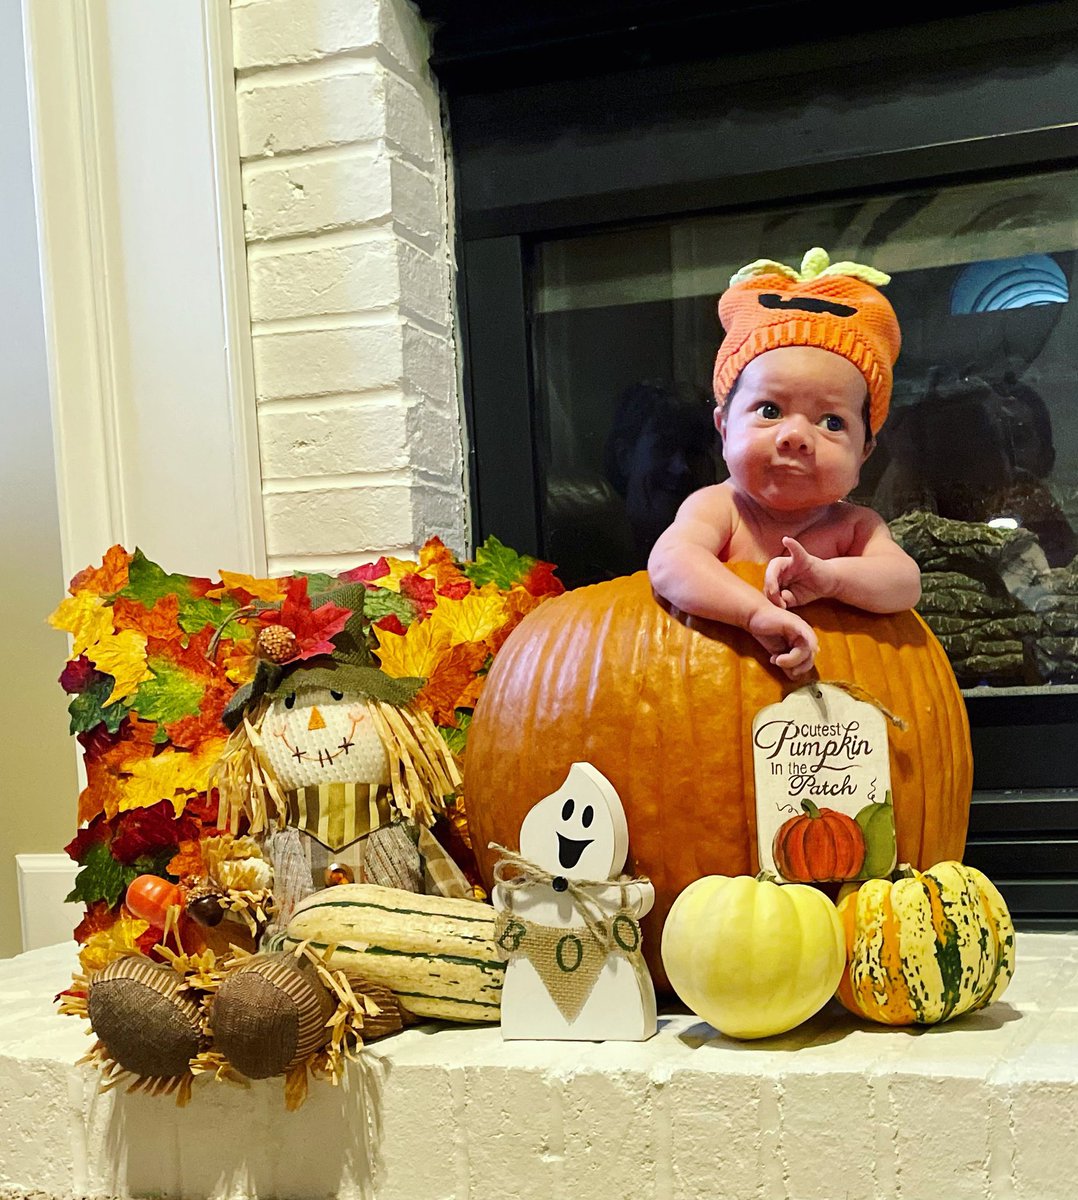 Enjoying maternity leave with my little pumpkin 🎃